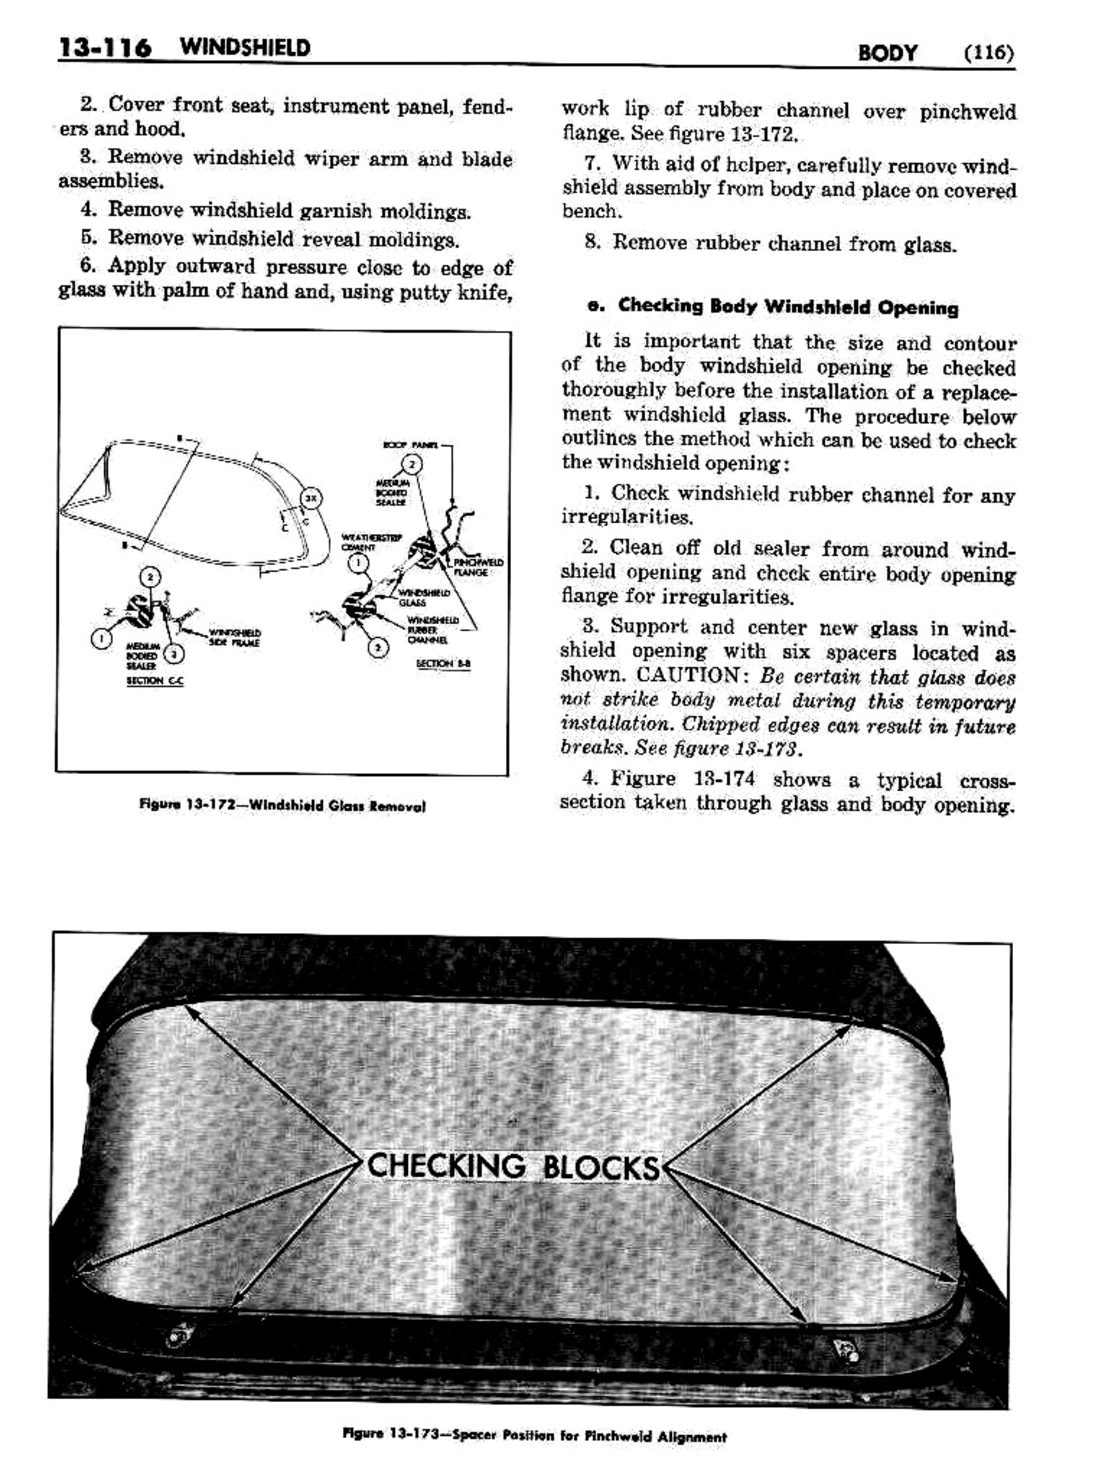 n_1958 Buick Body Service Manual-117-117.jpg